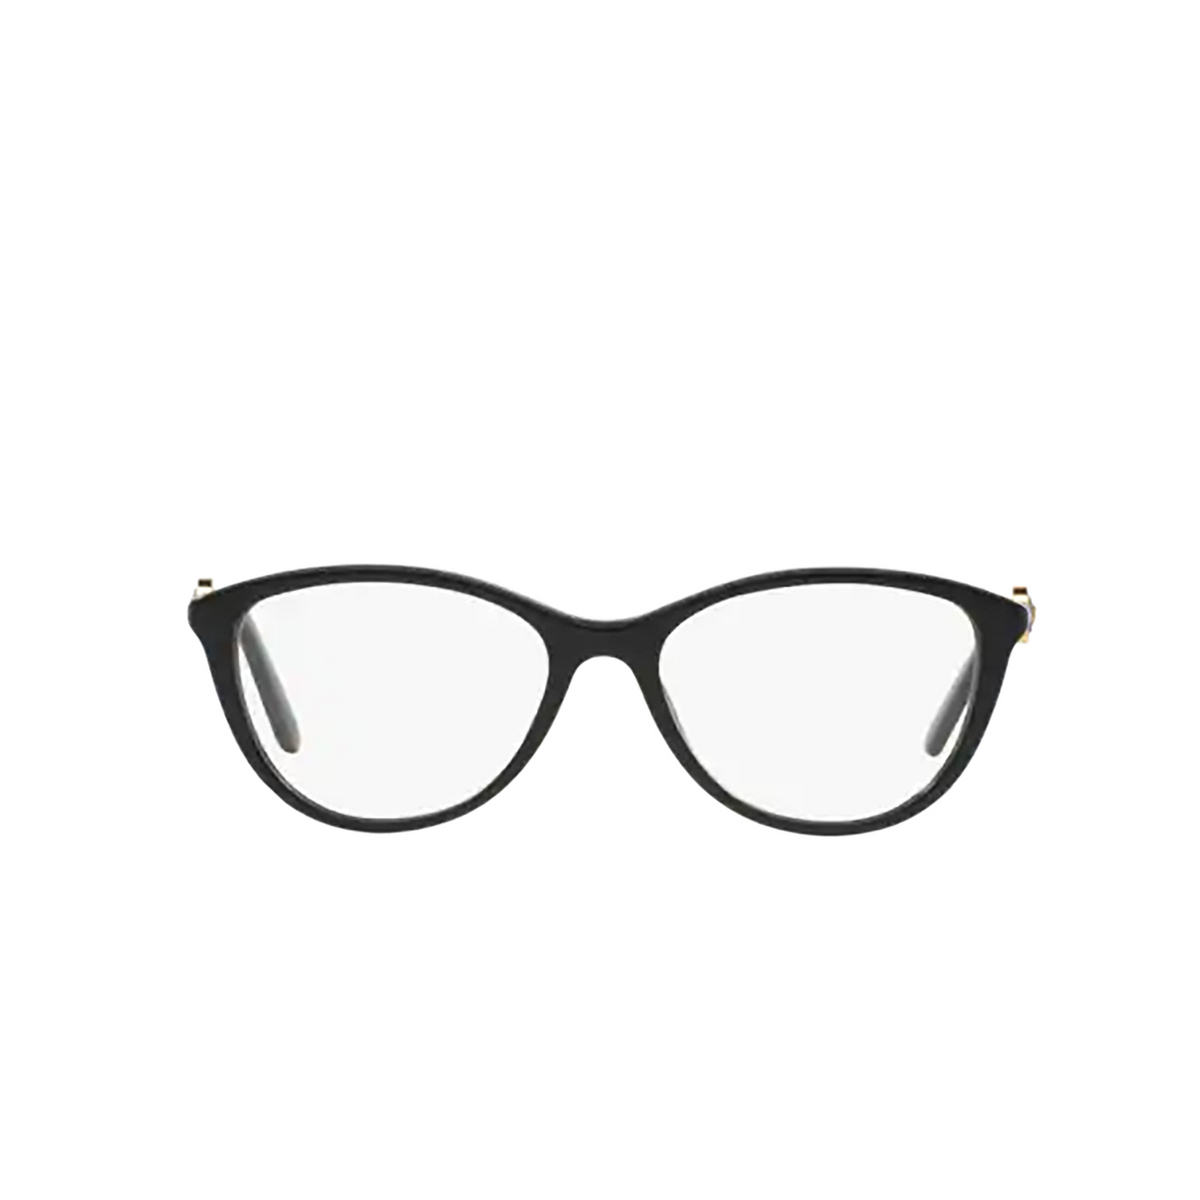 Versace® Oval Eyeglasses: VE3175 color Black GB1 - front view.